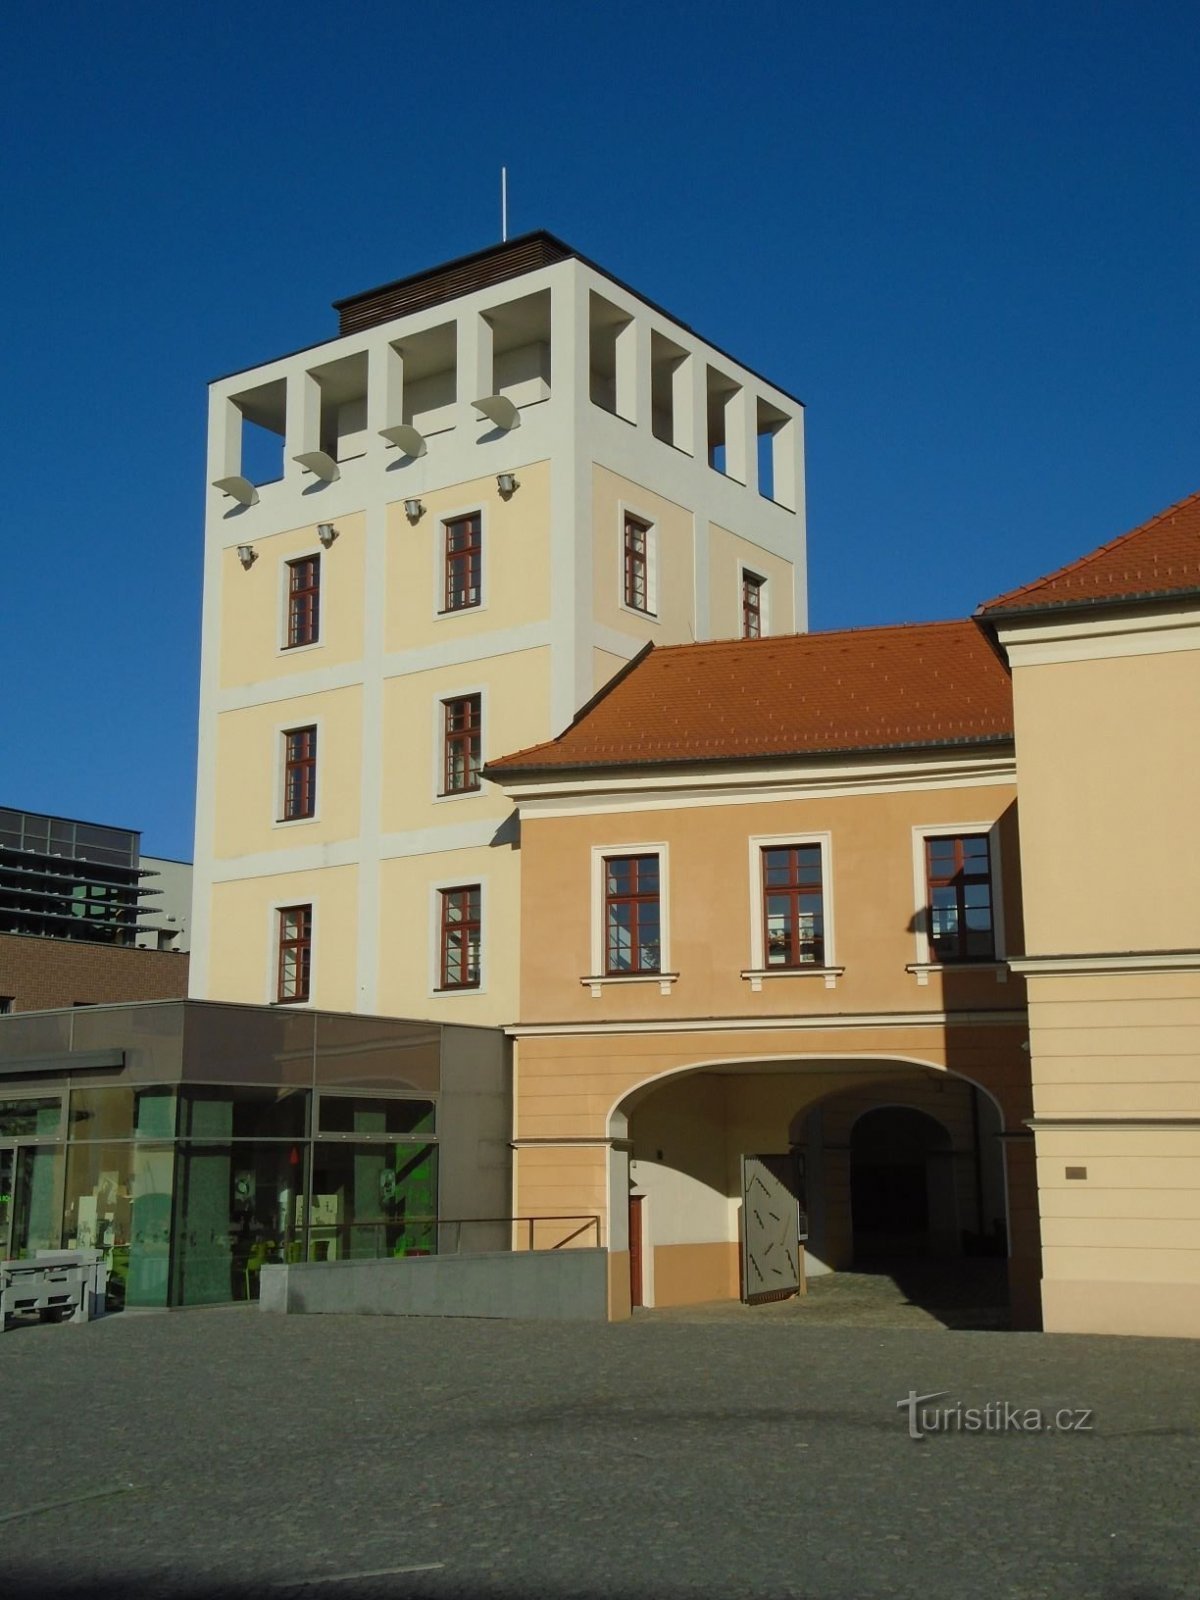 L'ex torre dell'acqua Kozinka (Hradec Králové, 17.11.2018/XNUMX/XNUMX)